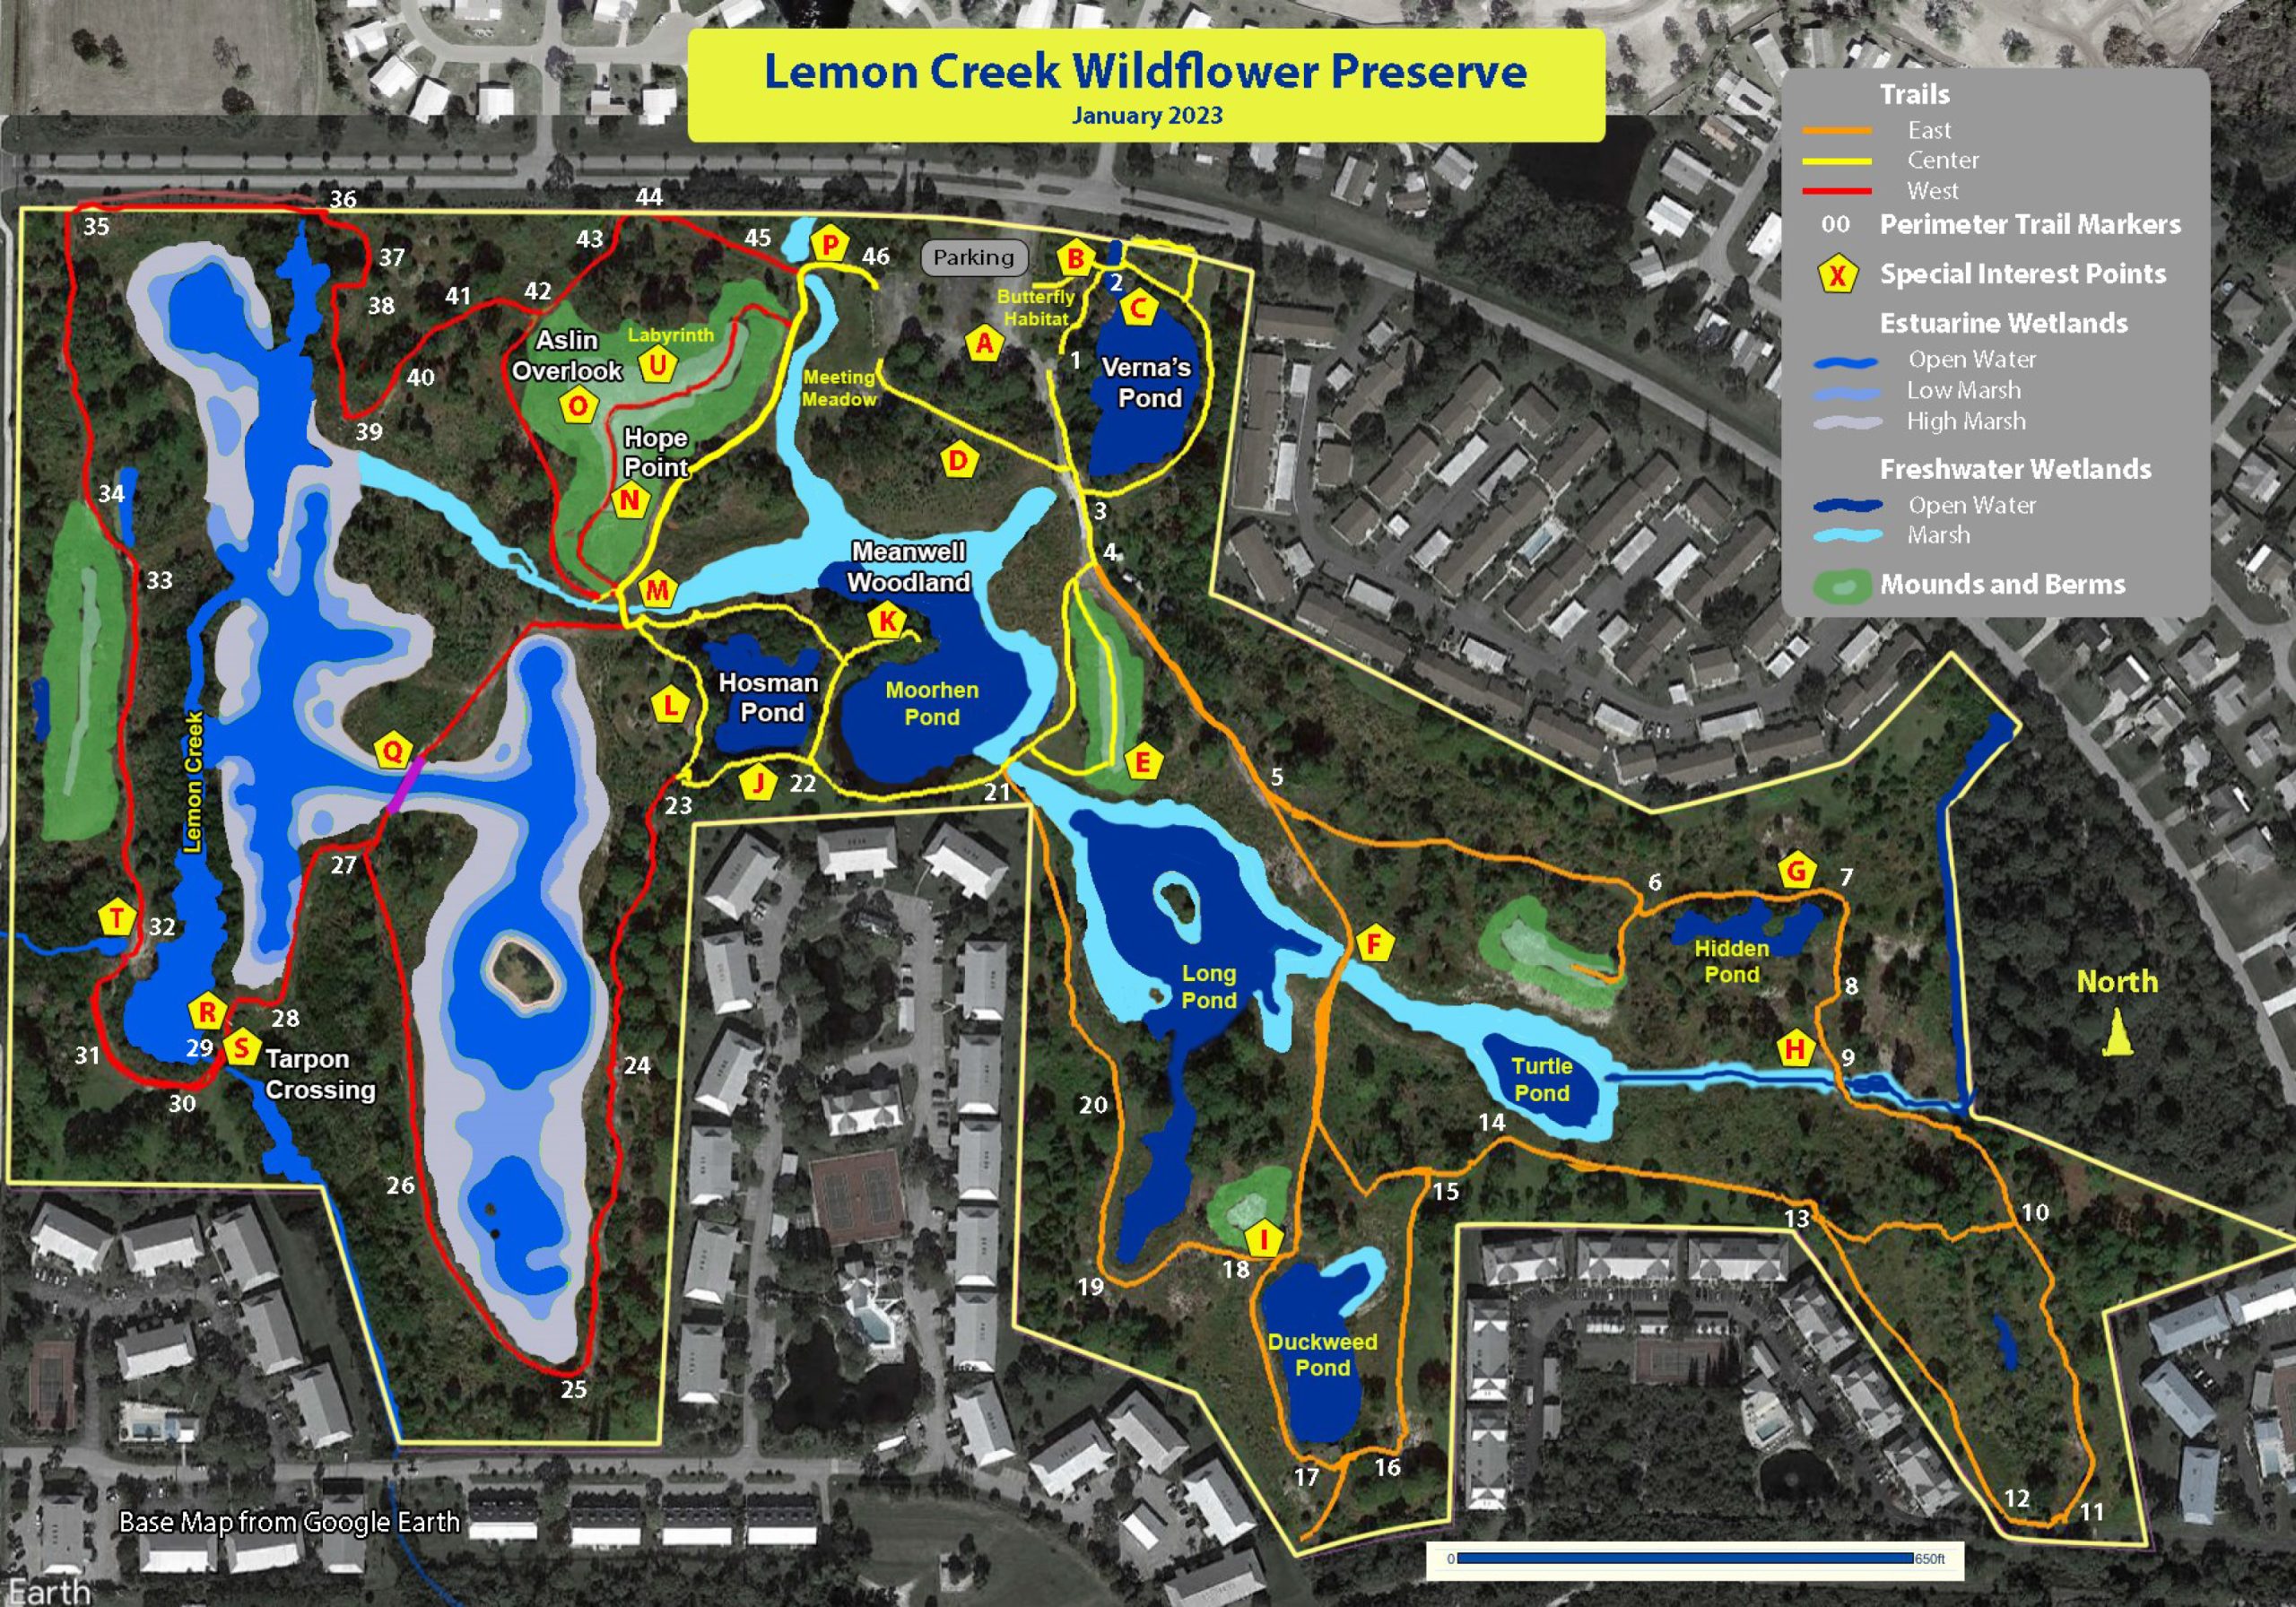 Lemon Creek Wildflower Preserve Trail Map Jan 2023